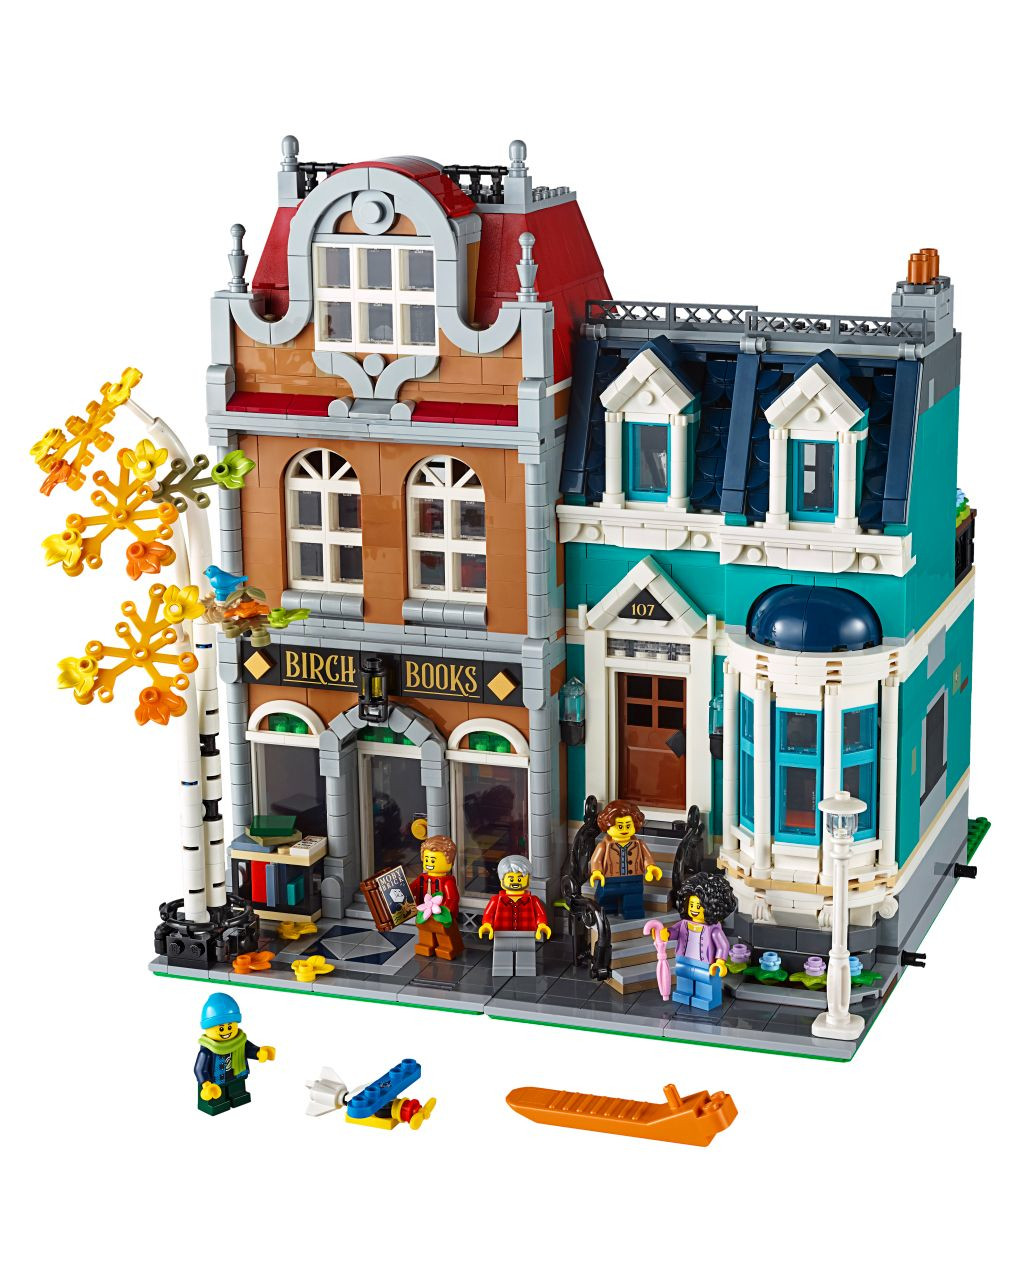 Lego creator expert - libreria - 10270 - LEGO